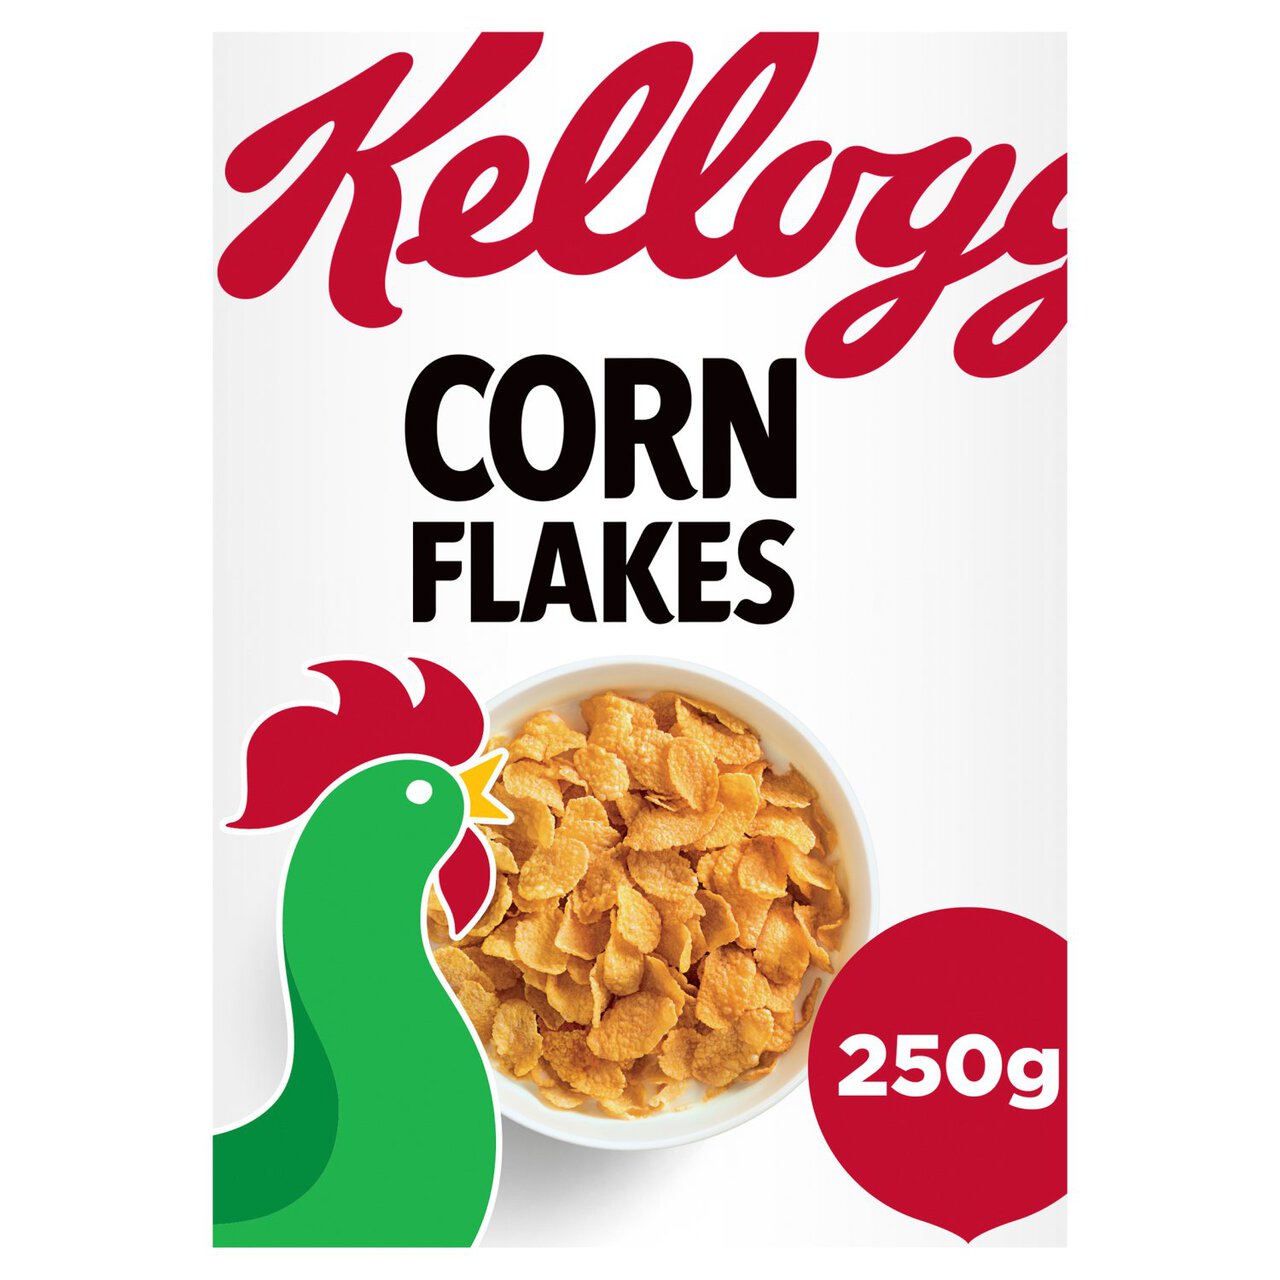 Kellogg's Corn Flakes 250g